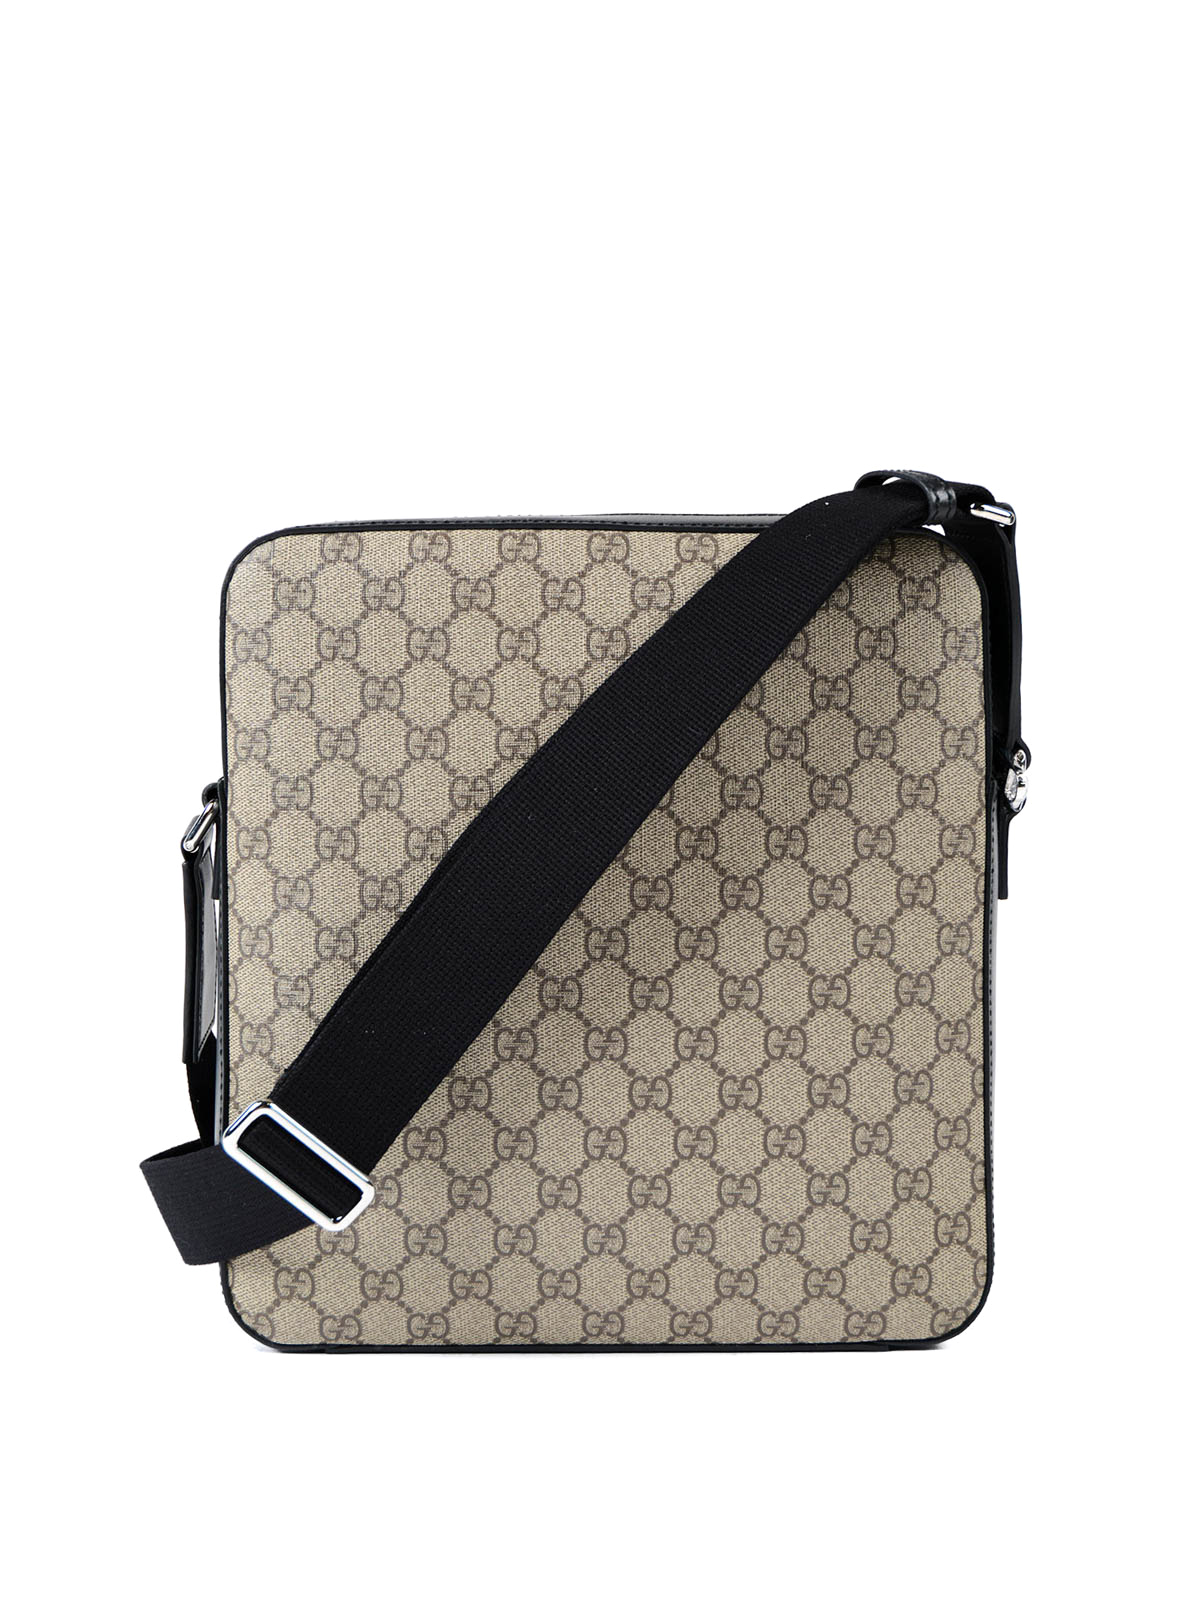 Gucci Dark Grey GG Supreme Canvas Messenger Bag Gucci